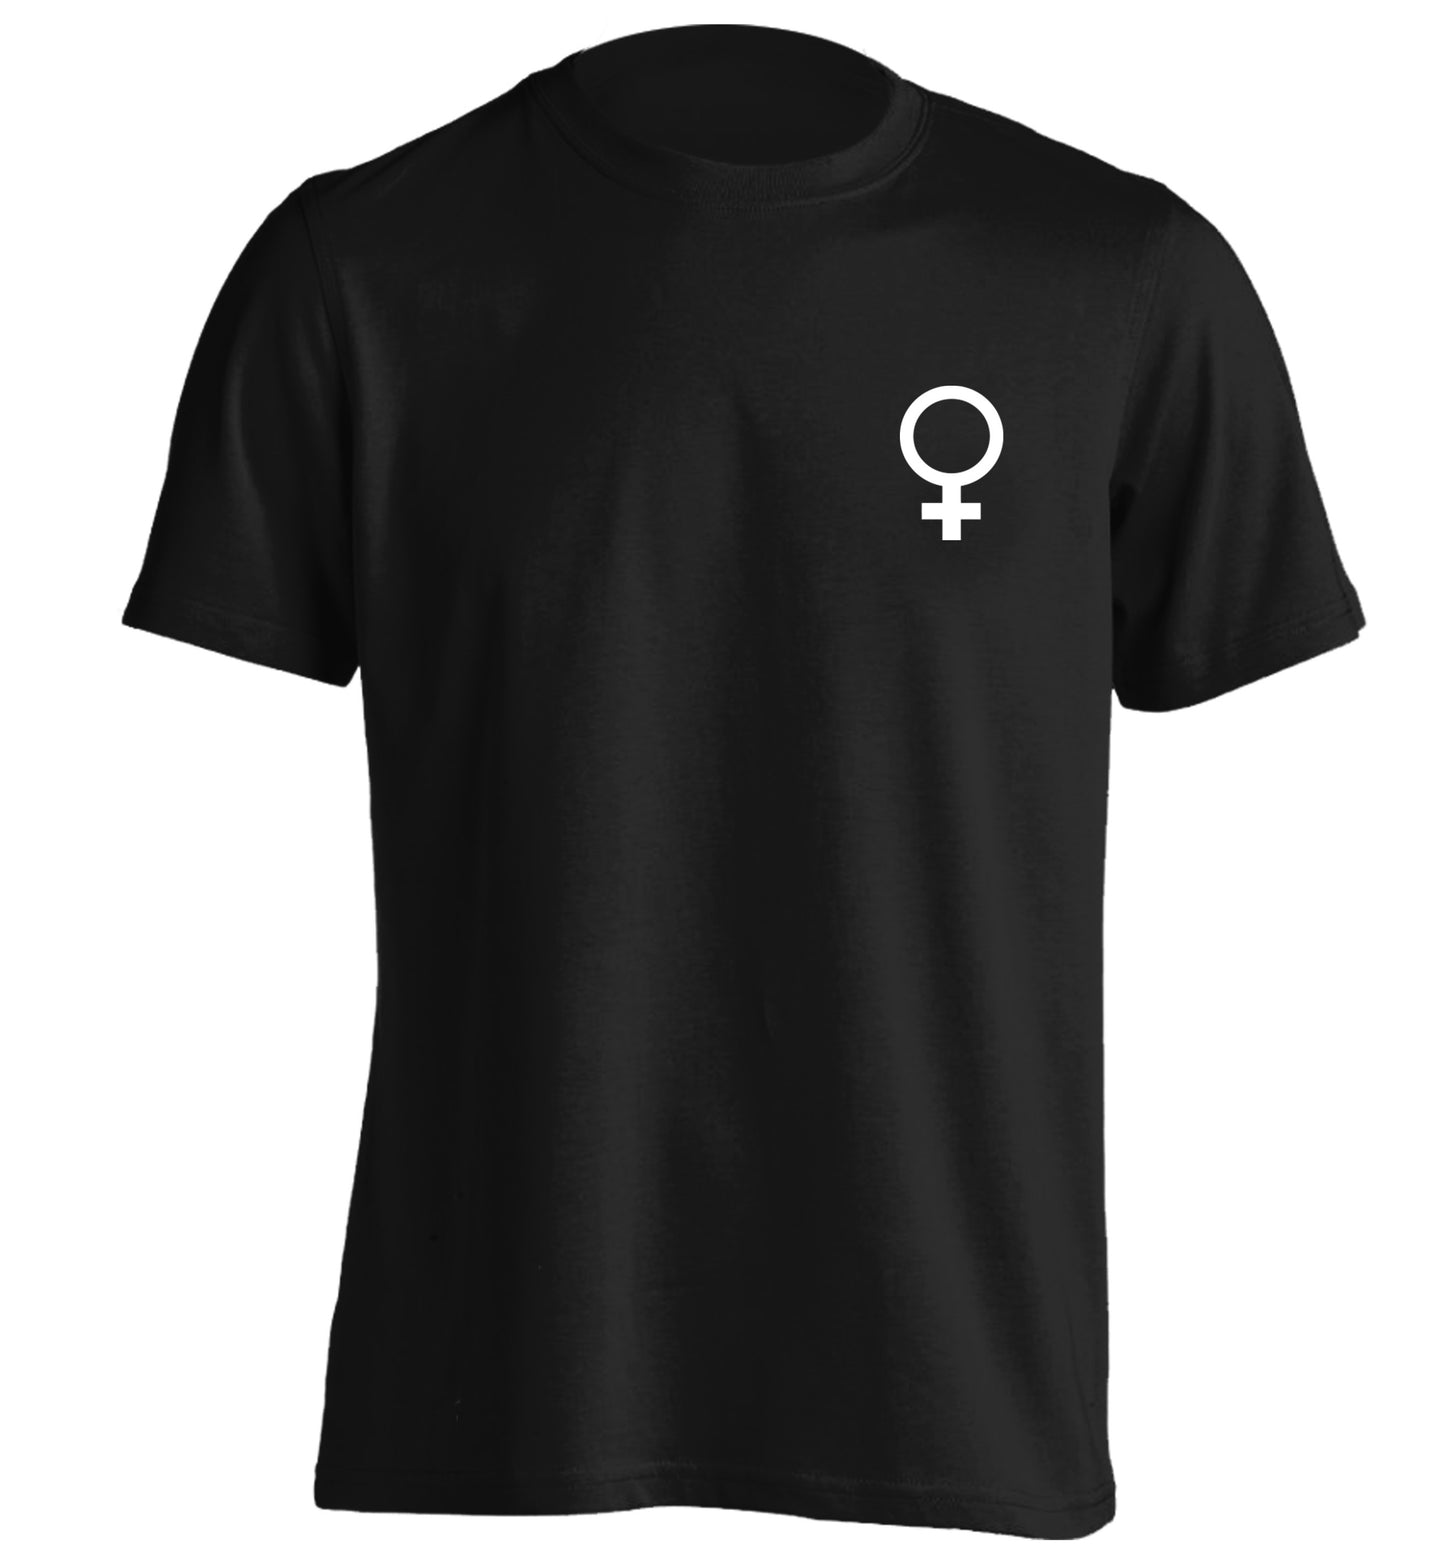 Female pocket symbol adults unisex black Tshirt 2XL